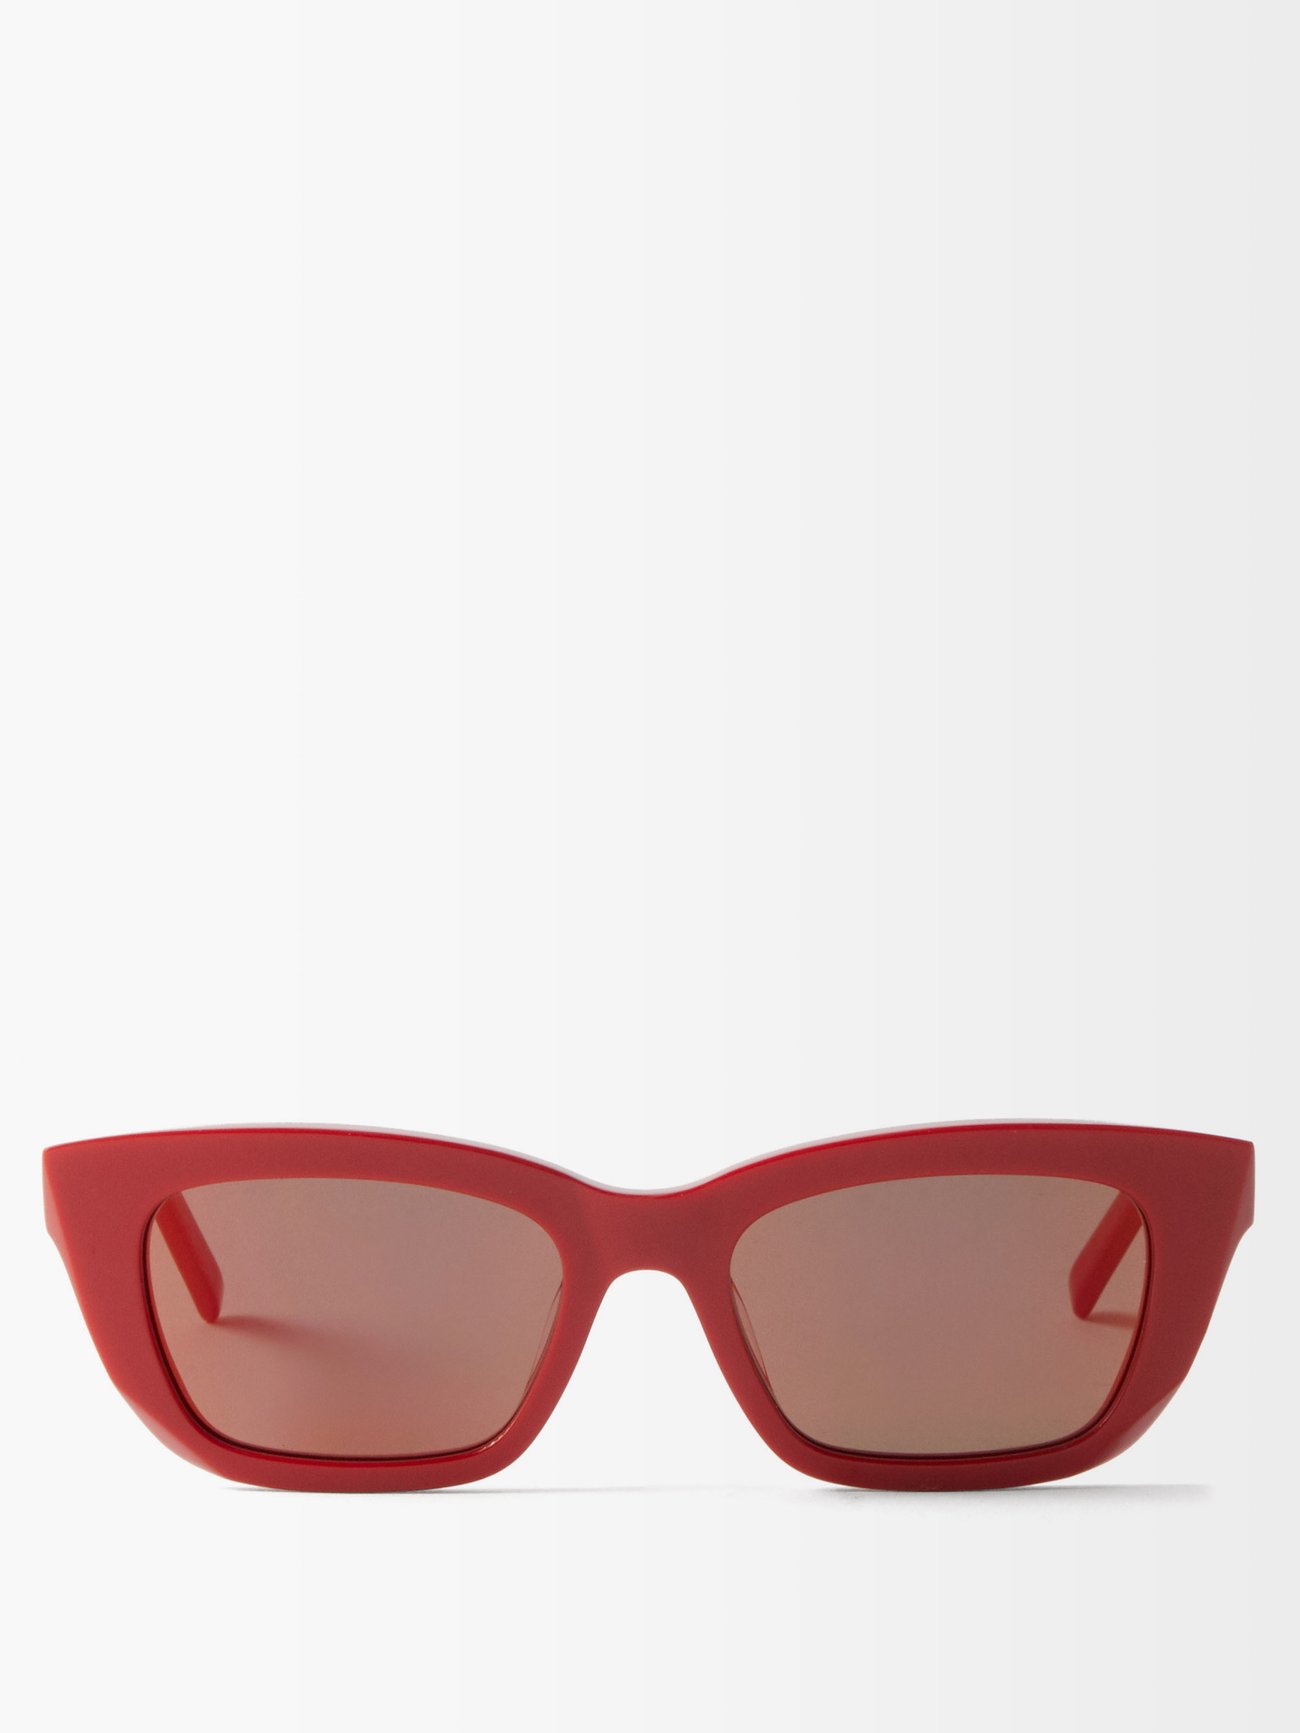 MATCHESFASHION Men Accessories Sunglasses Square Sunglasses Red Mens Square-framed Acetate Sunglasses 